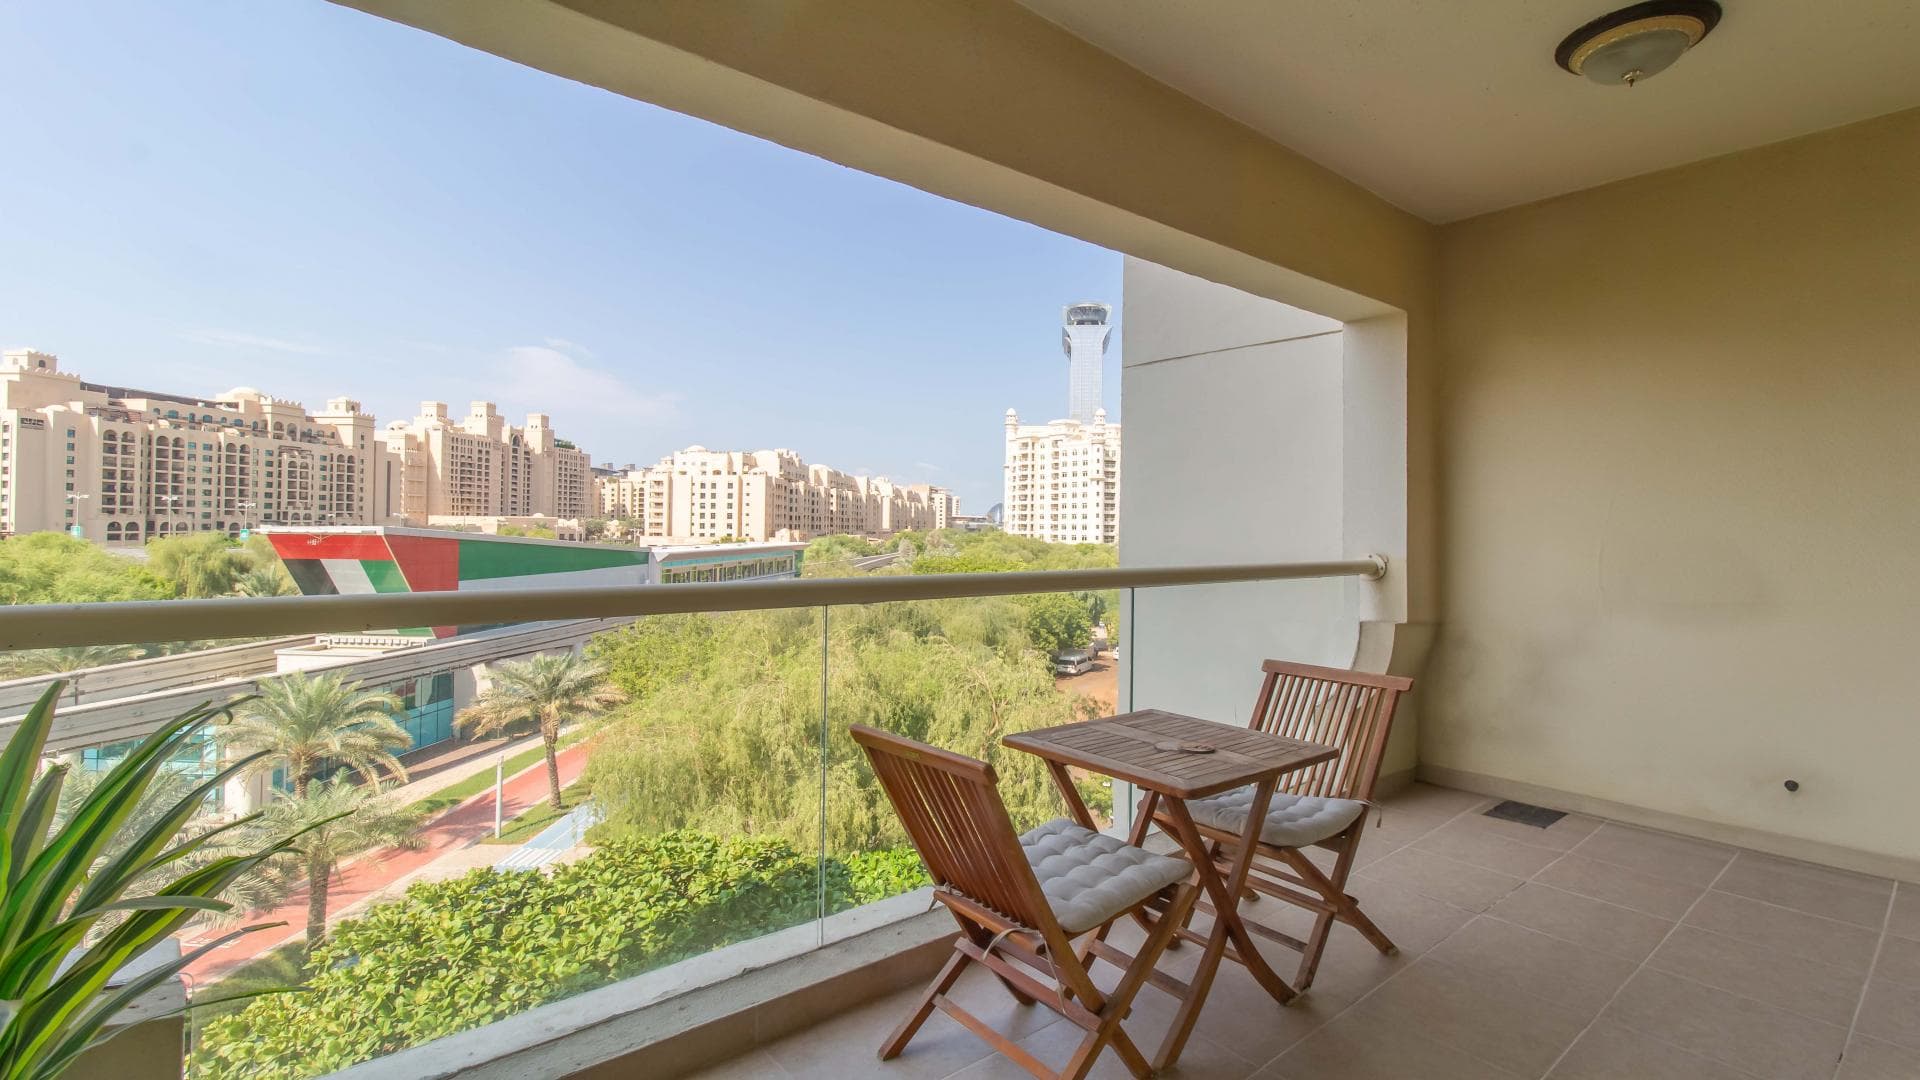 1 Bedroom Apartment For Rent Al Sheraa Tower Lp38201 143e58e9913ccd00.jpg